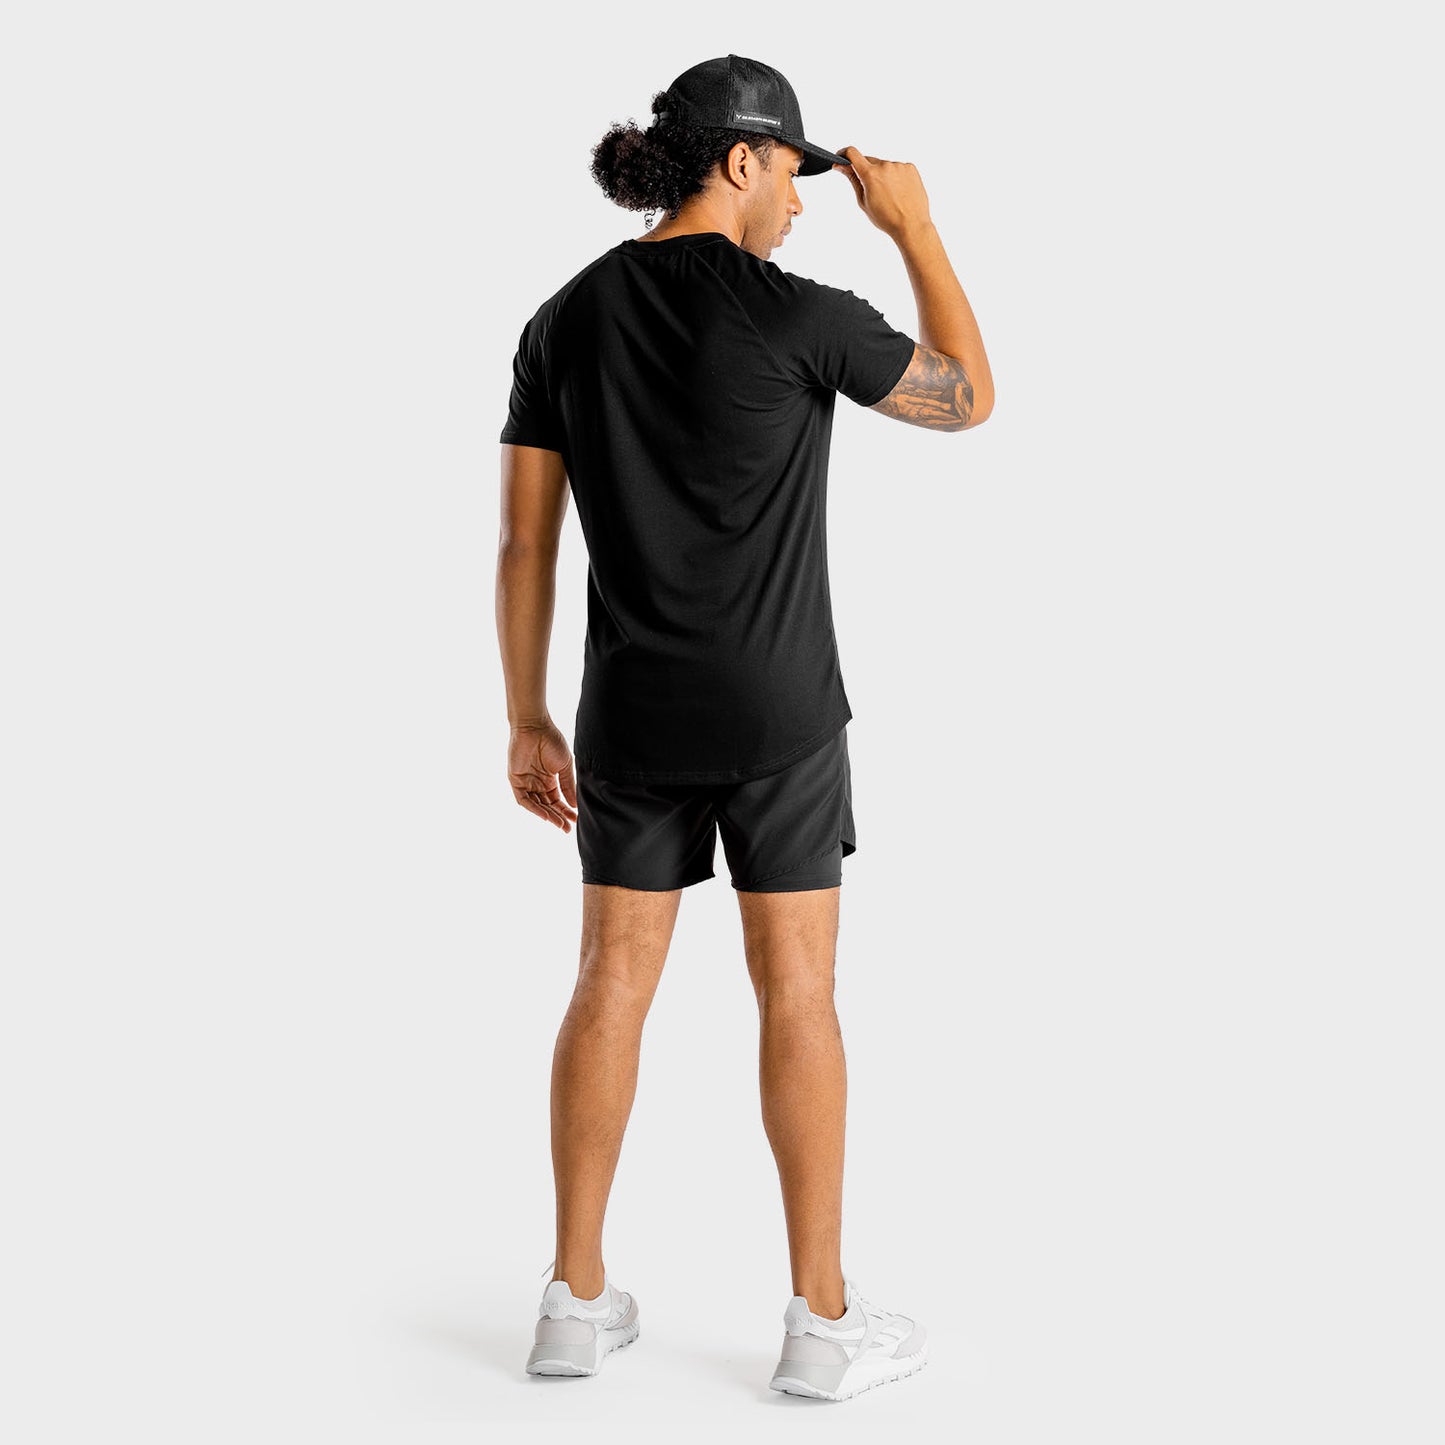 squatwolf-workout-cap-for-men-primal-baseball-cap-black-gym-wear